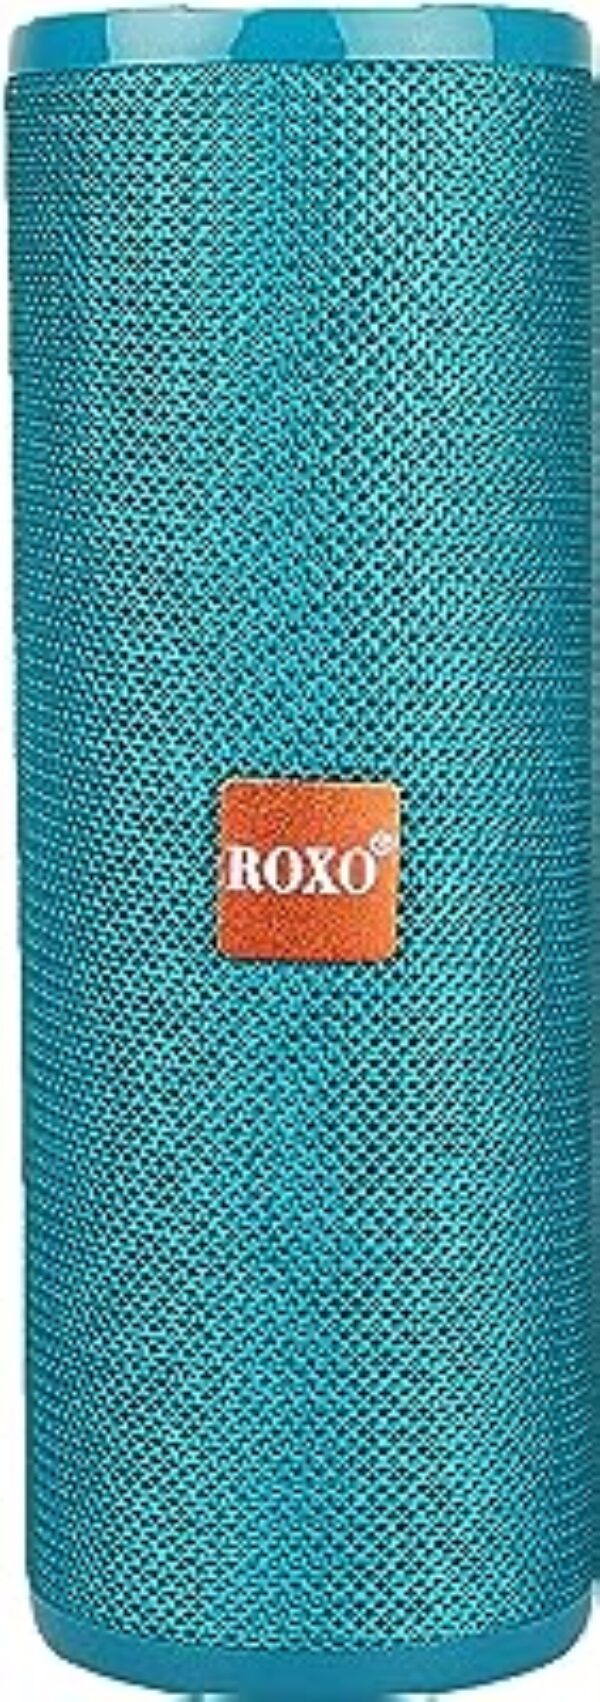 ROXO TG 149 Wireless Bluetooth Speaker (Green)